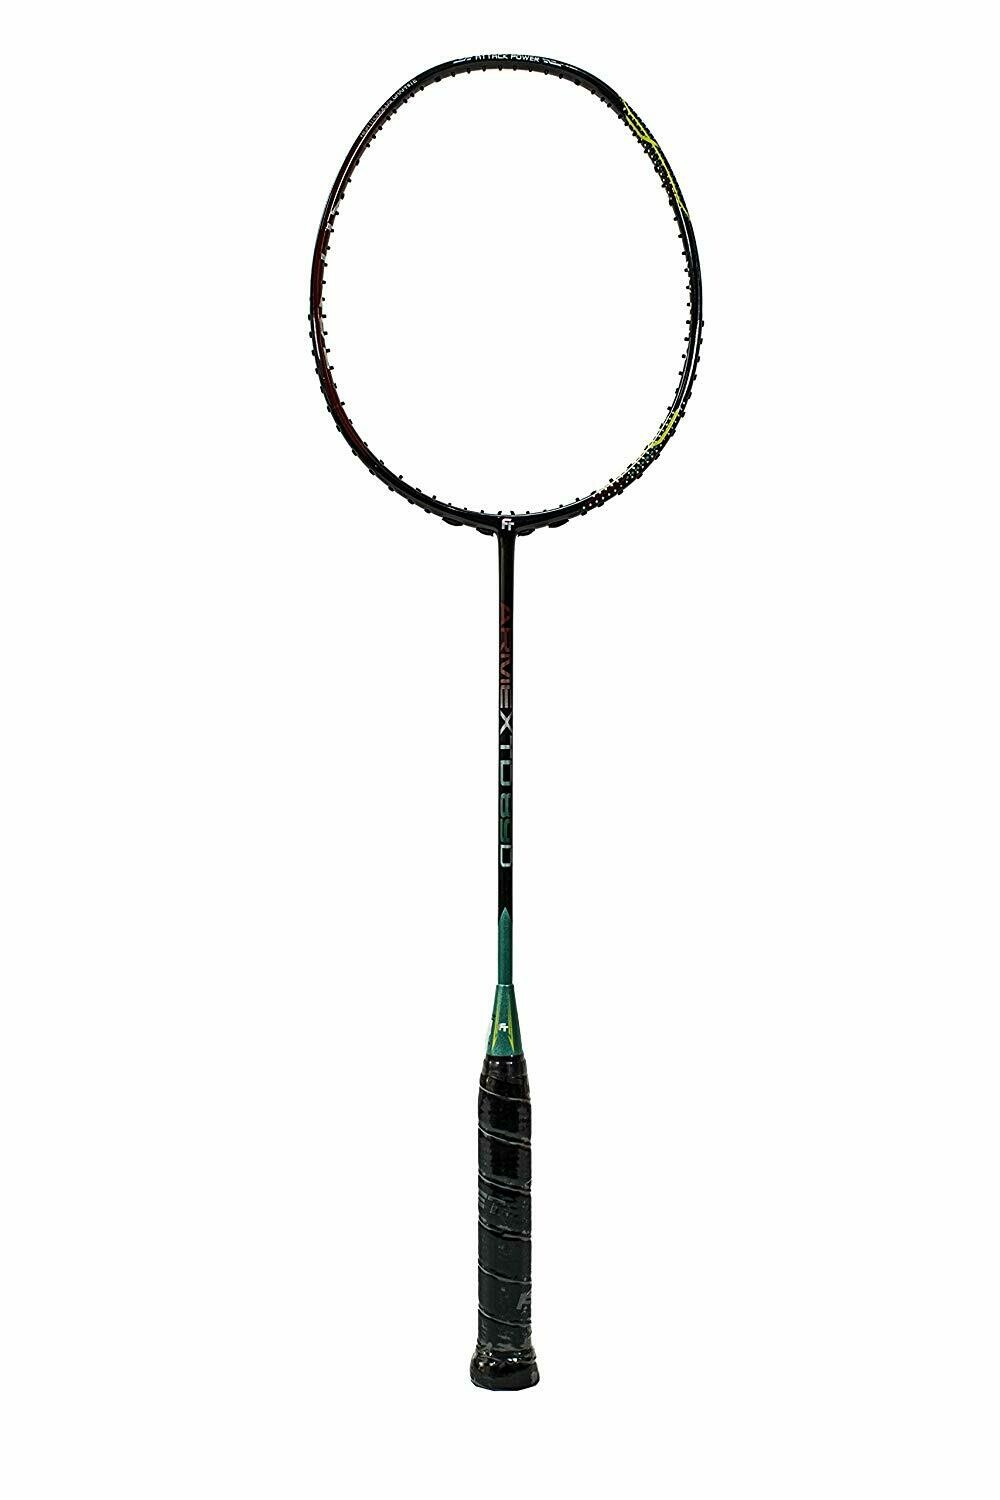 Fleet Armextd 89 D Black Badminton Racquet